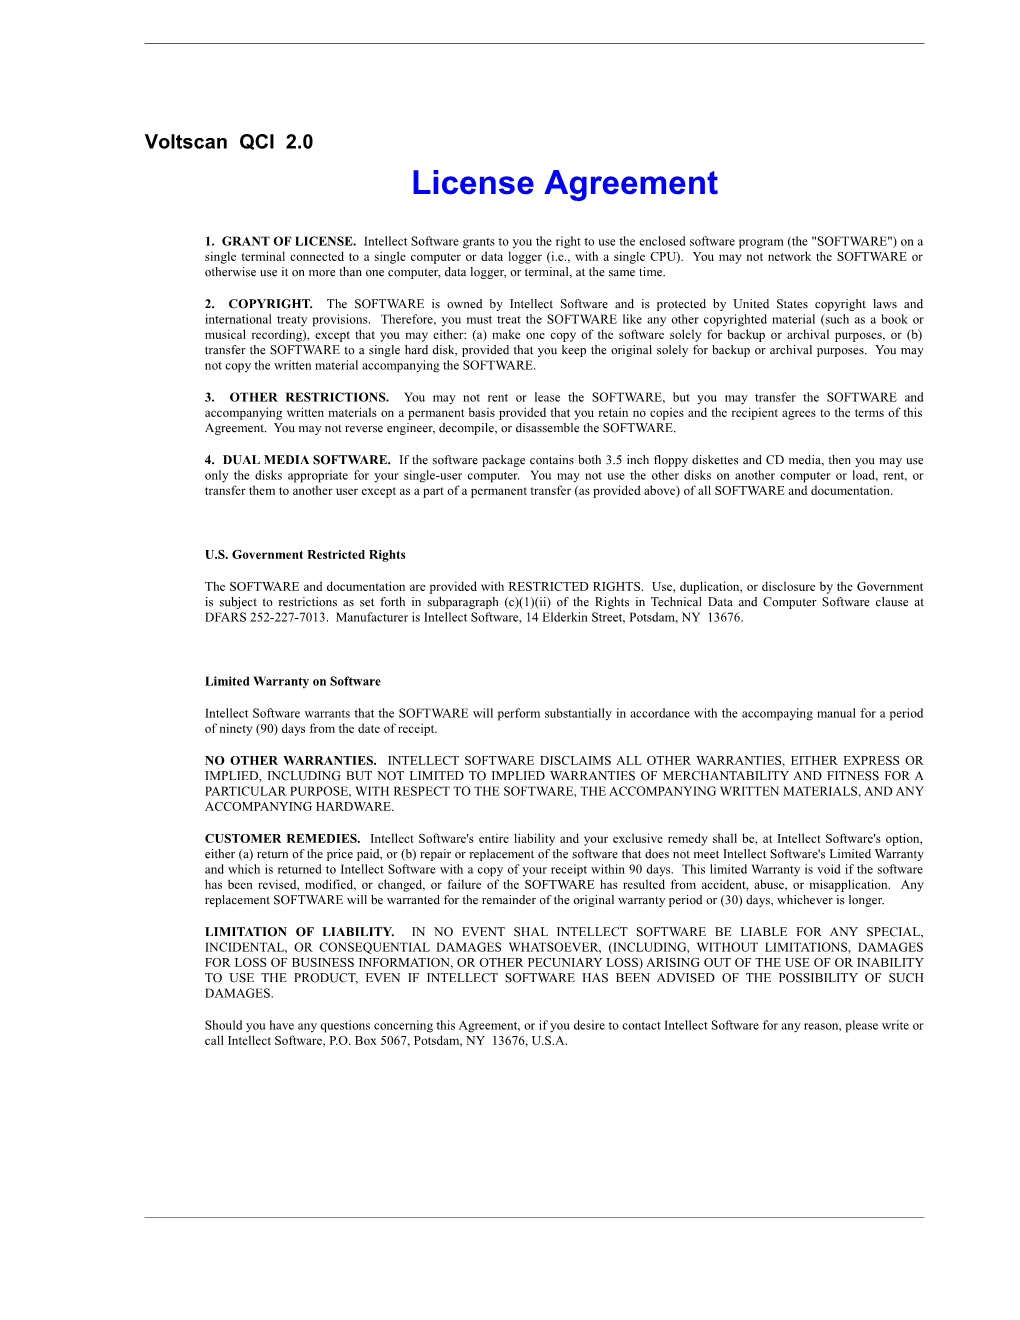 Voltscan License Agreement